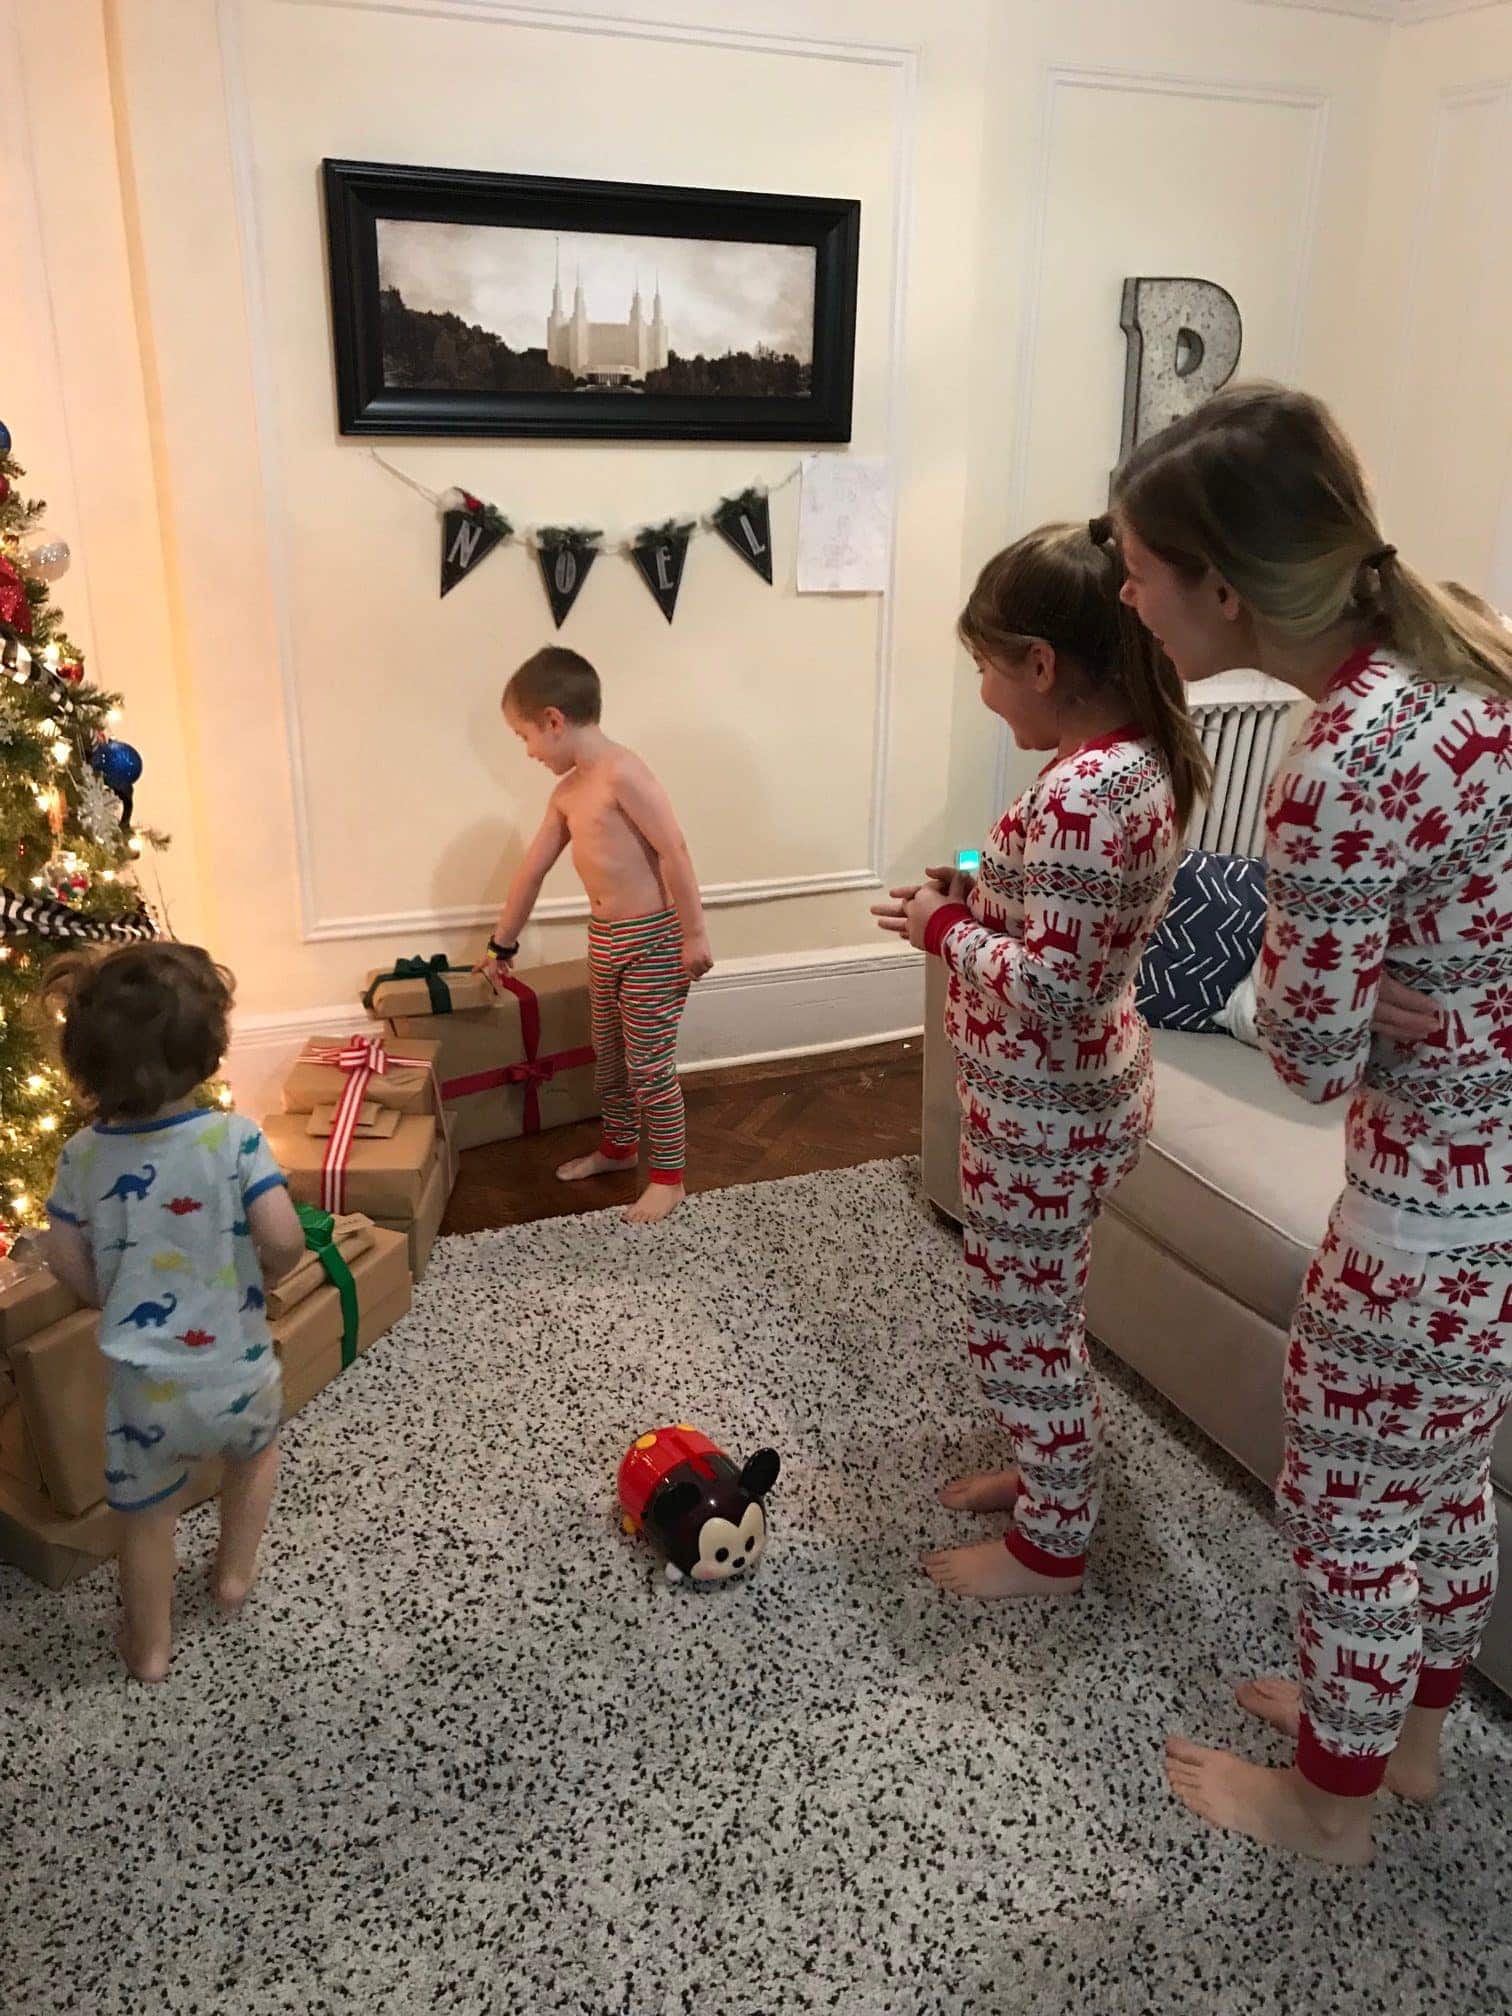 Lauren and kids looking at Christmas tree